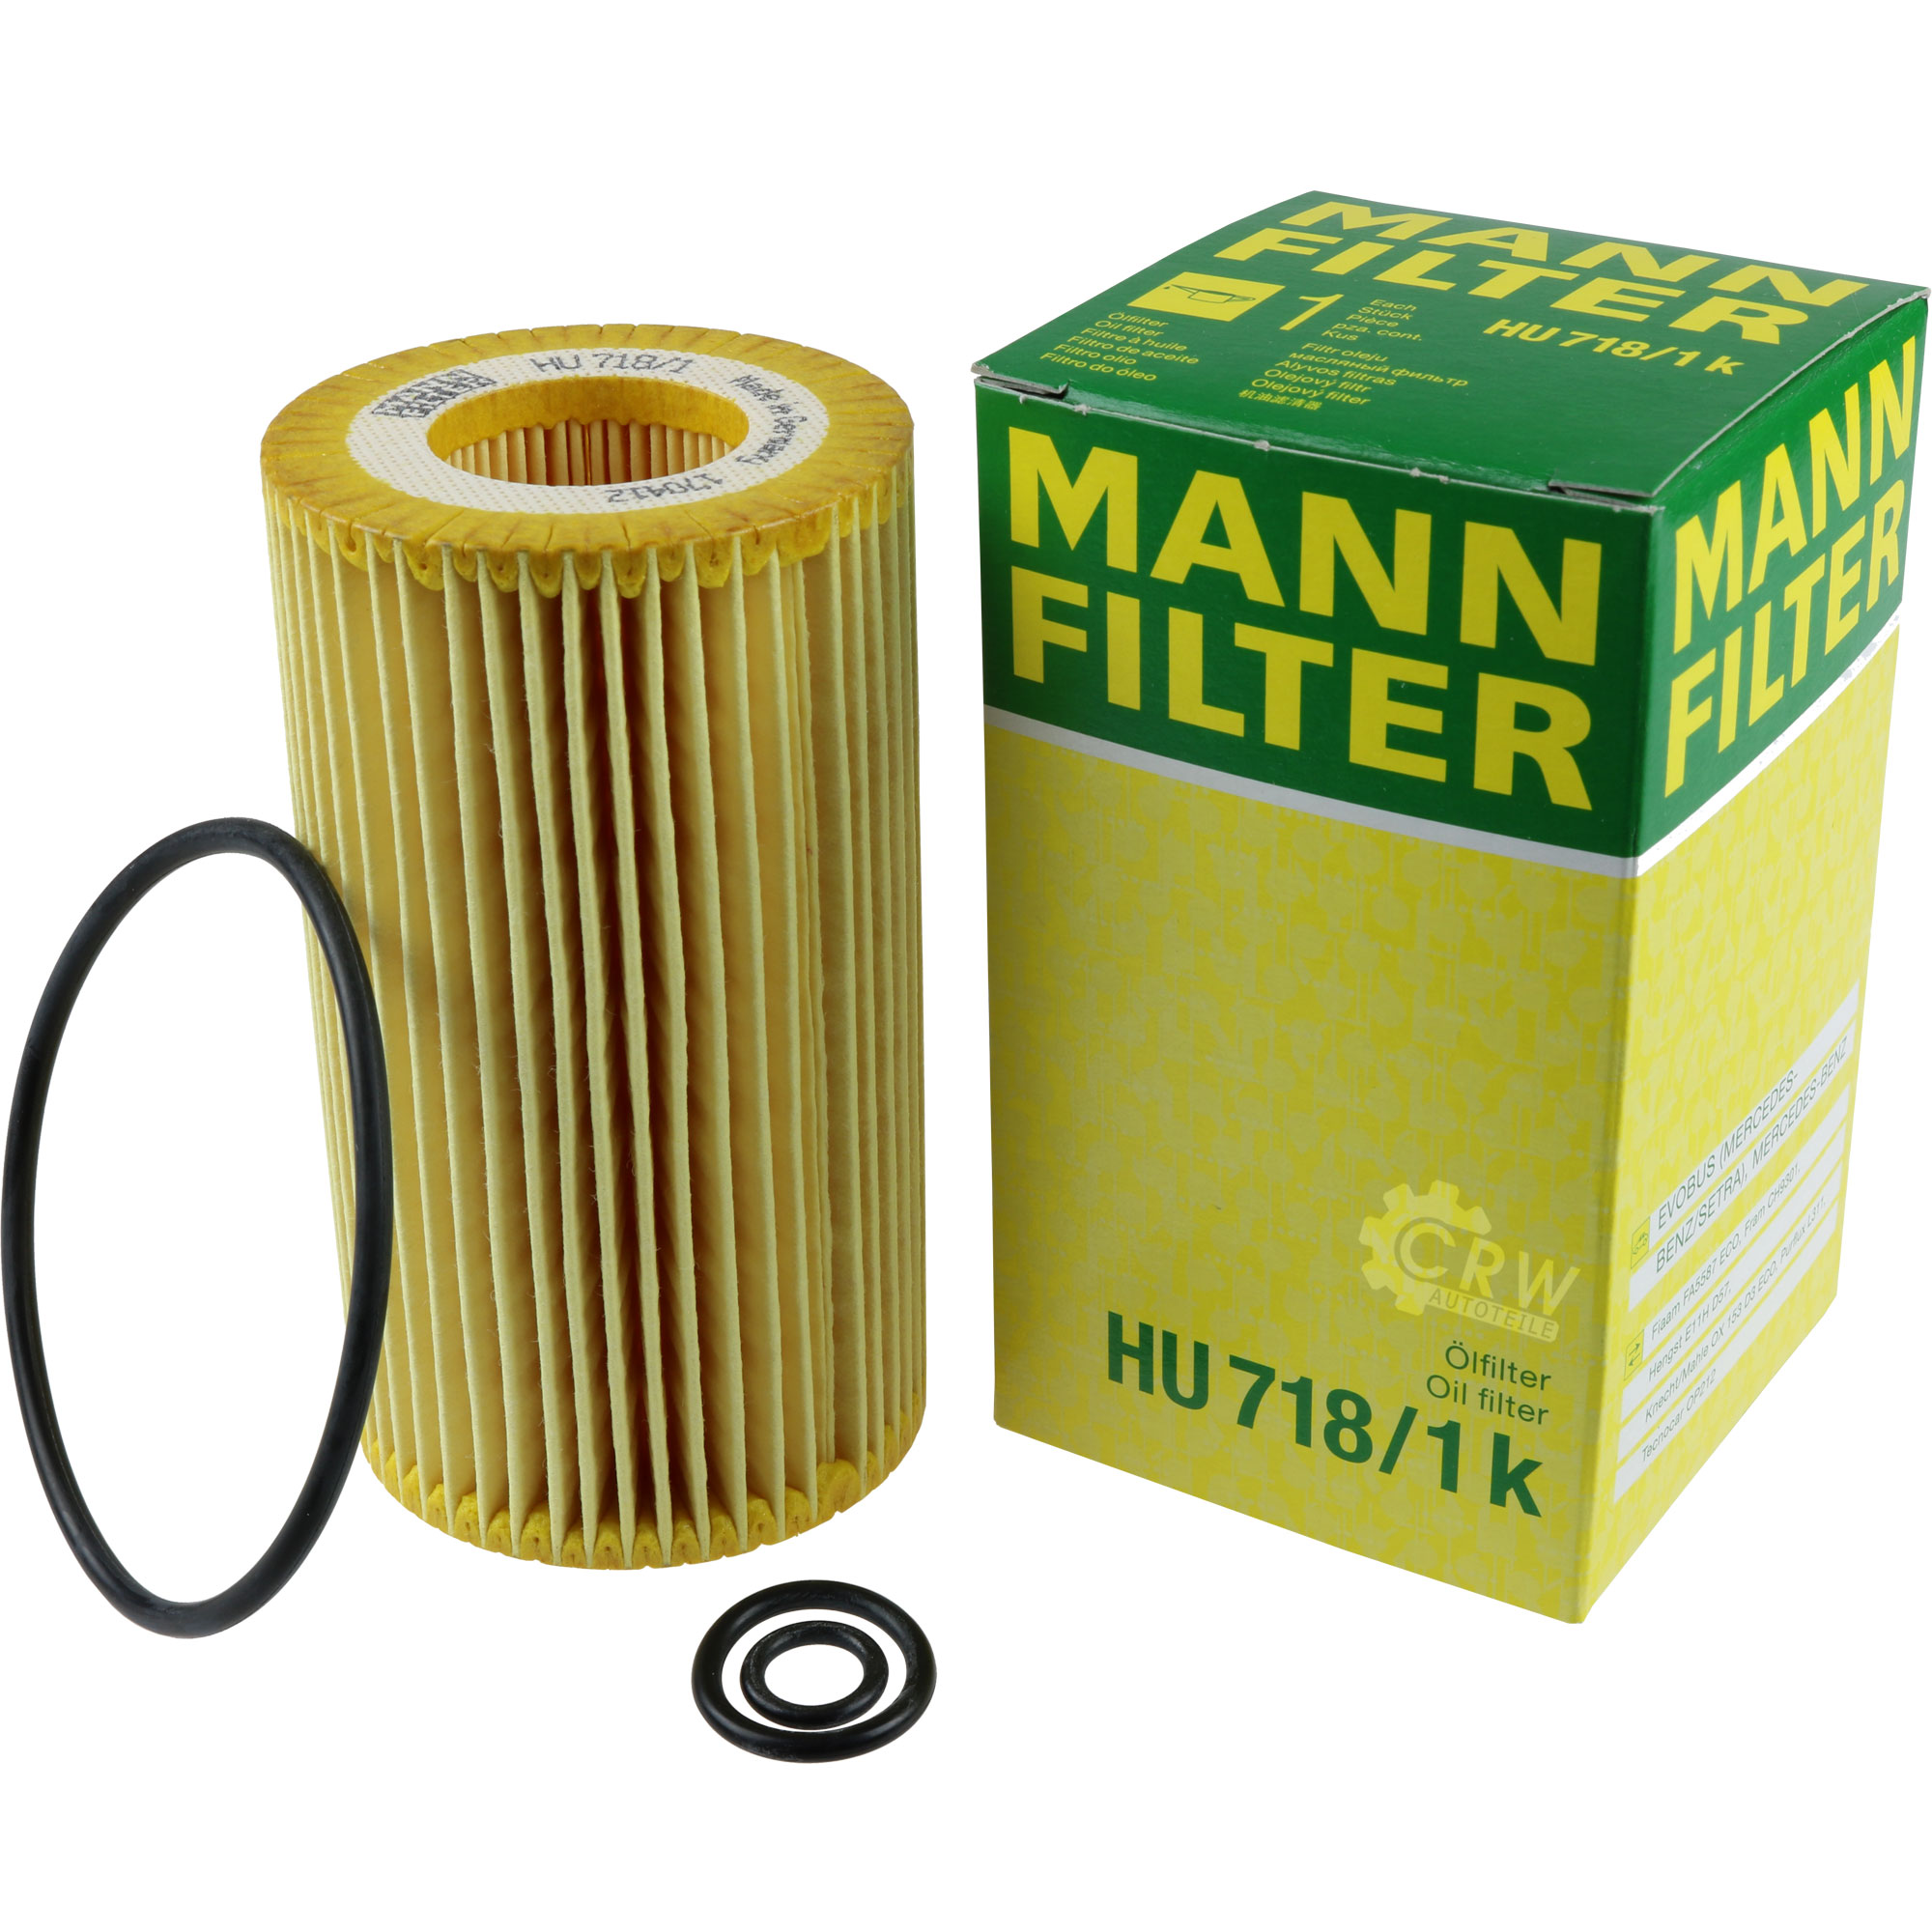 MANN-FILTER Ölfilter HU 718/1 k Oil Filter